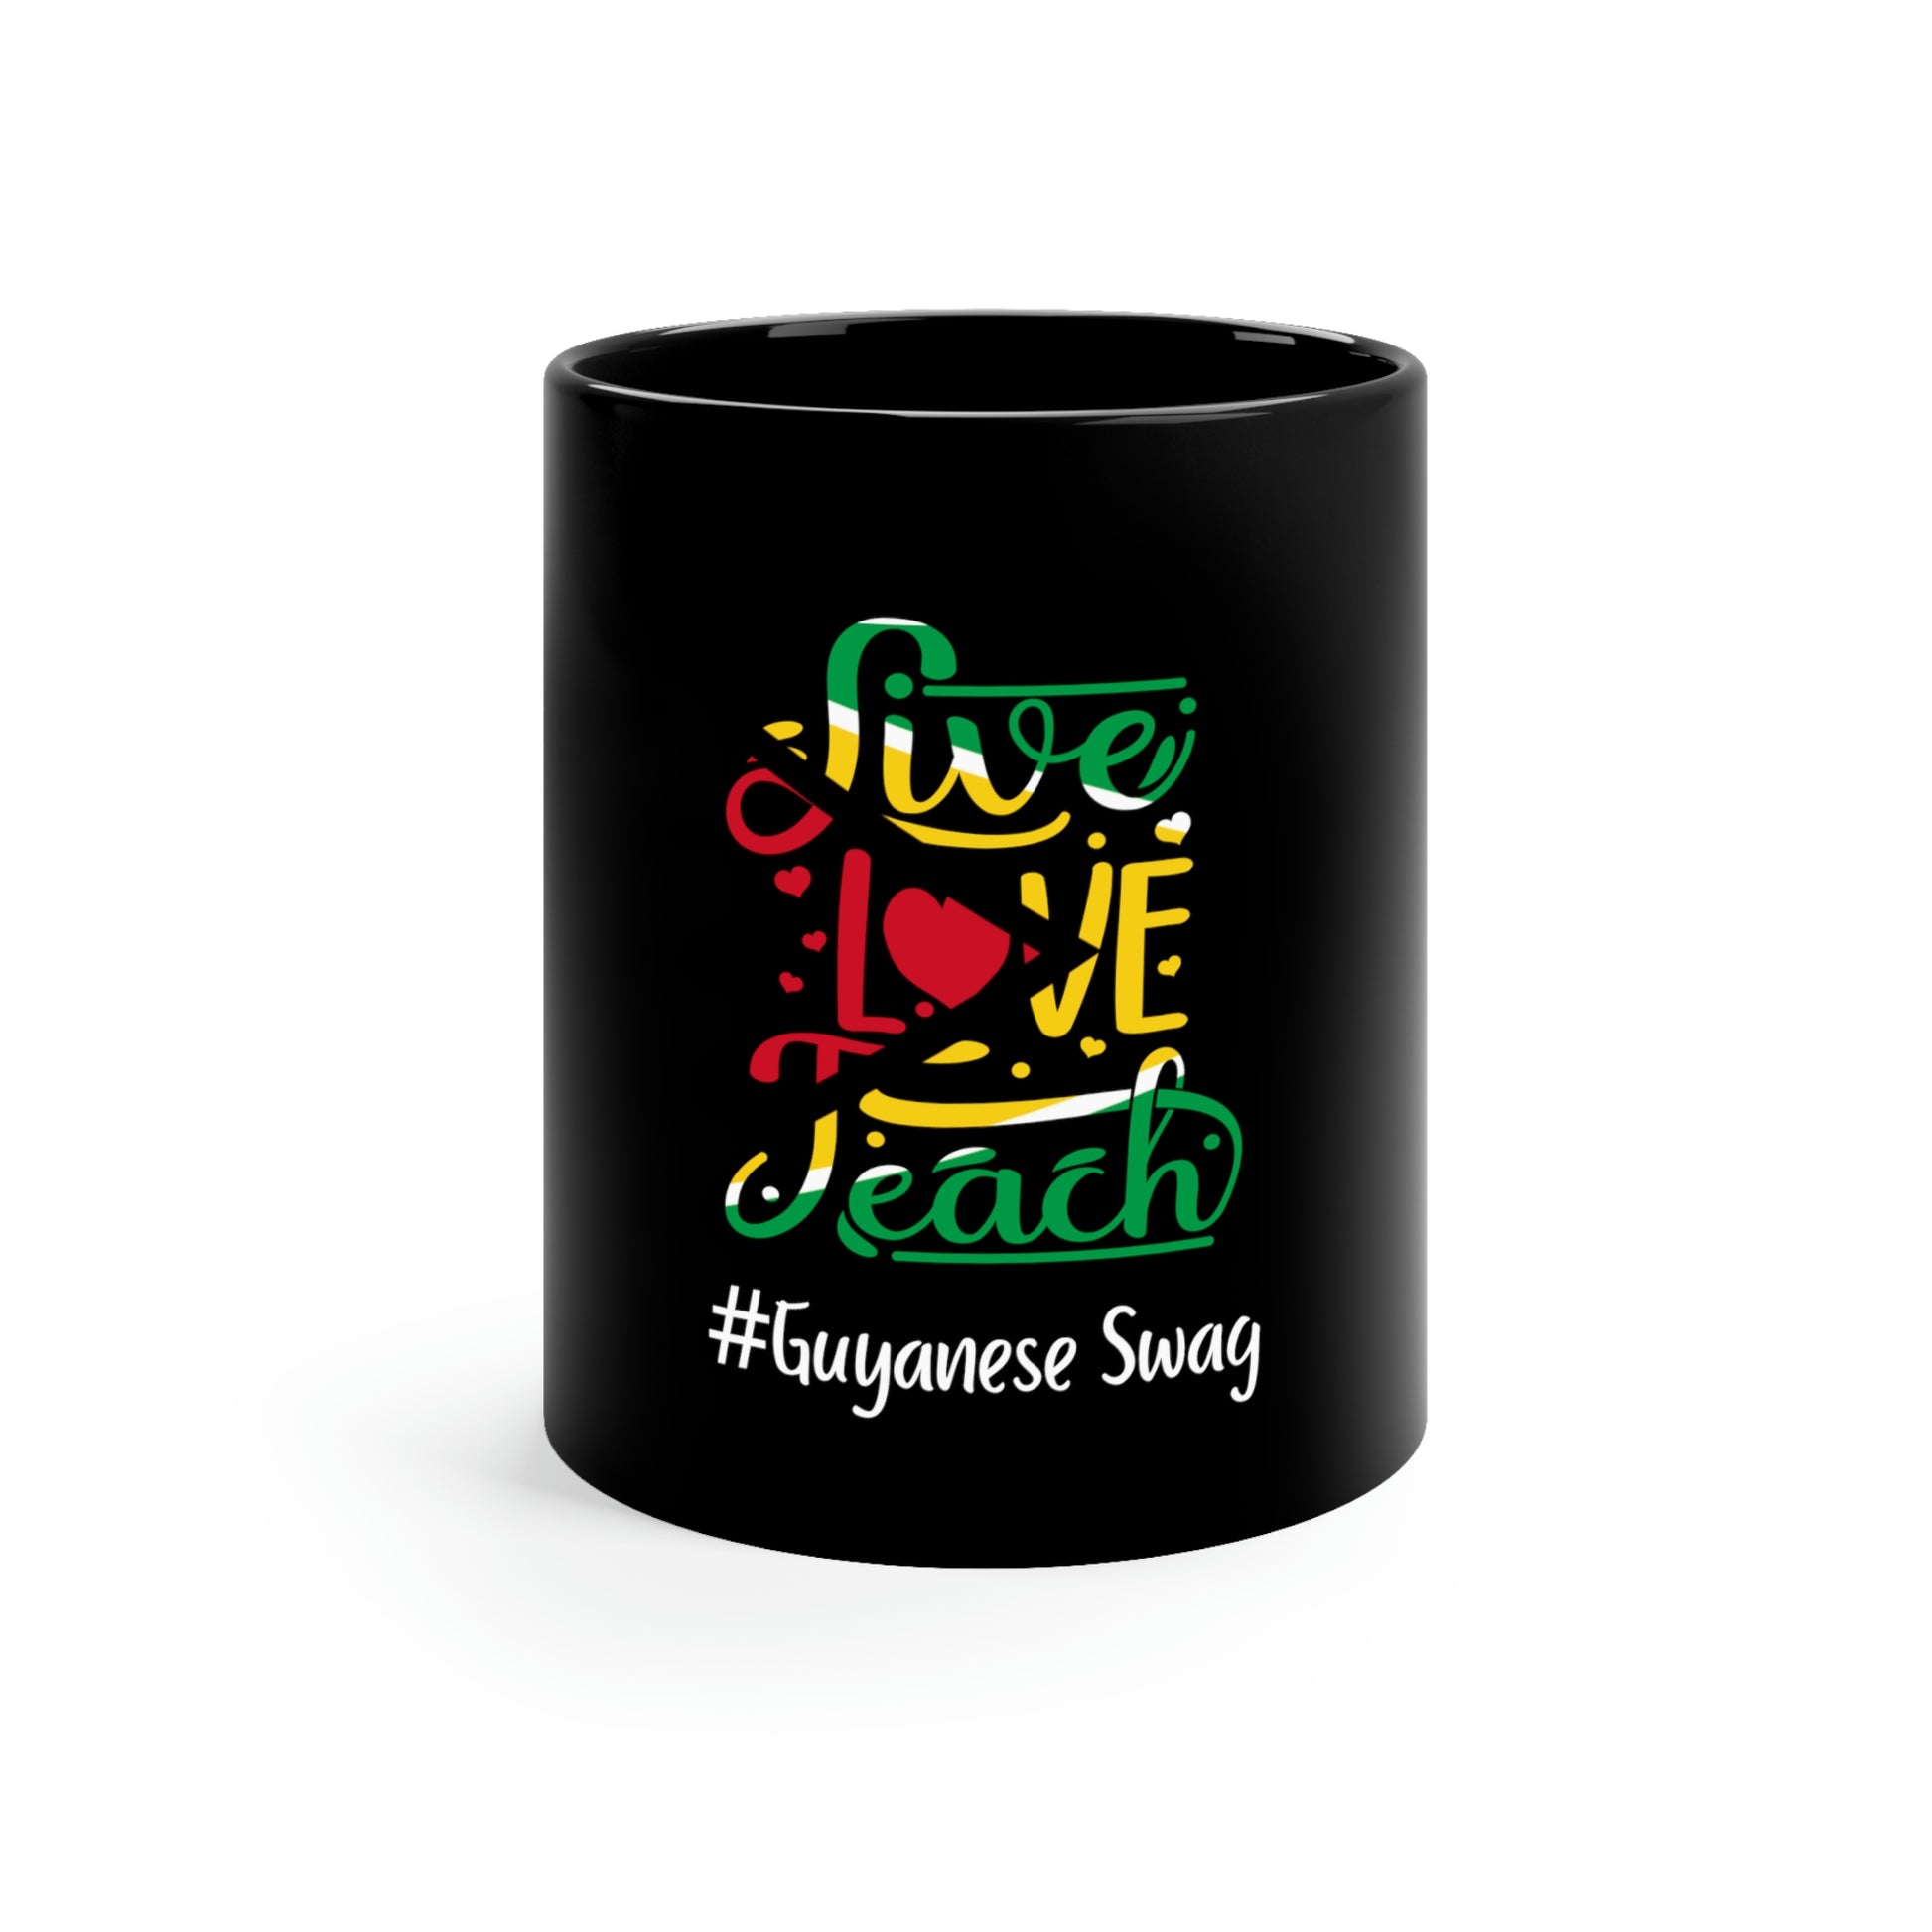 Guyanese Swag Live Love Teach 11oz Black Mug with Guyana flag.